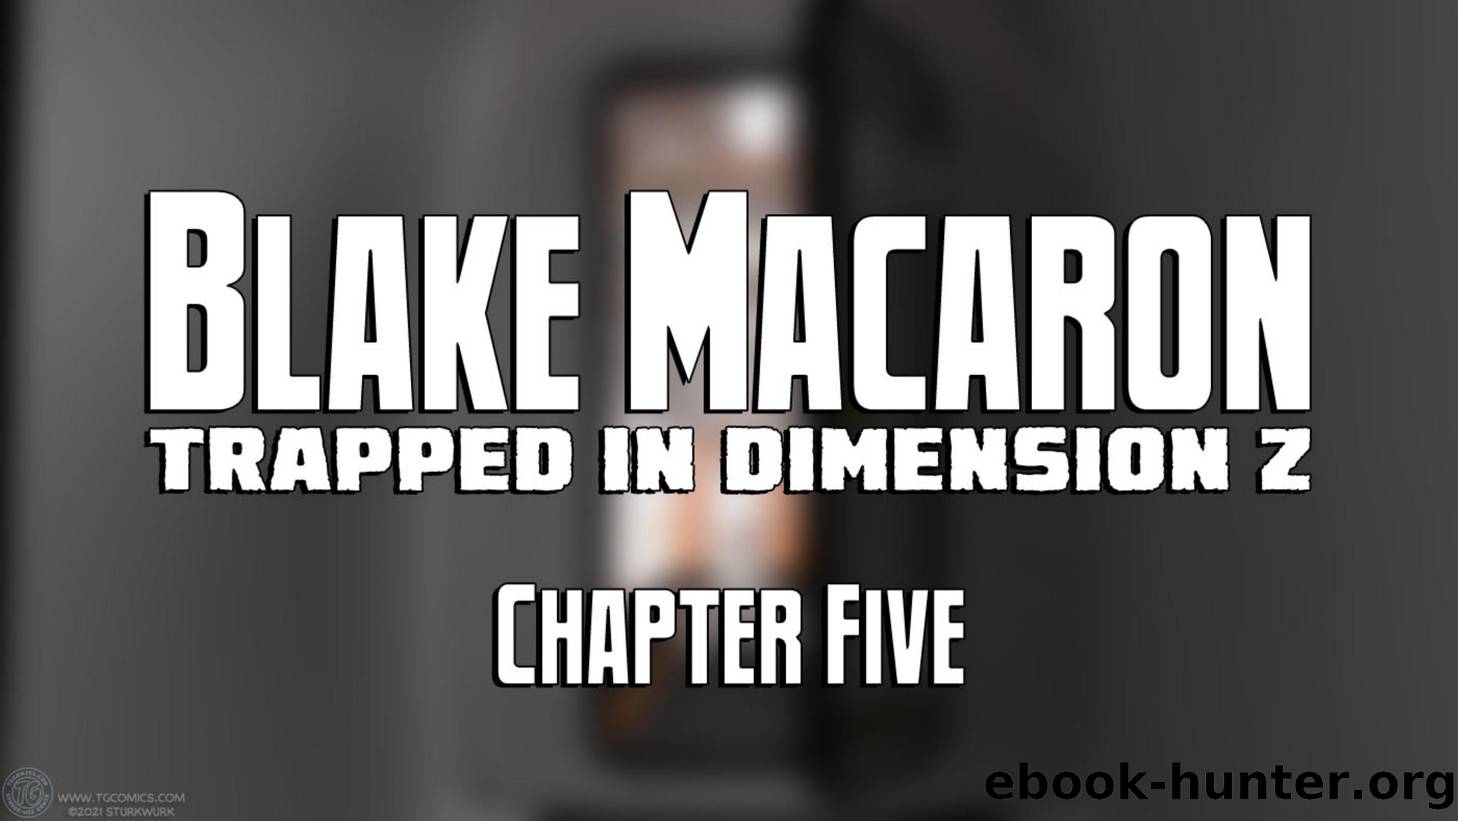 Blake Macaron - Chapter Five by SturkWurk